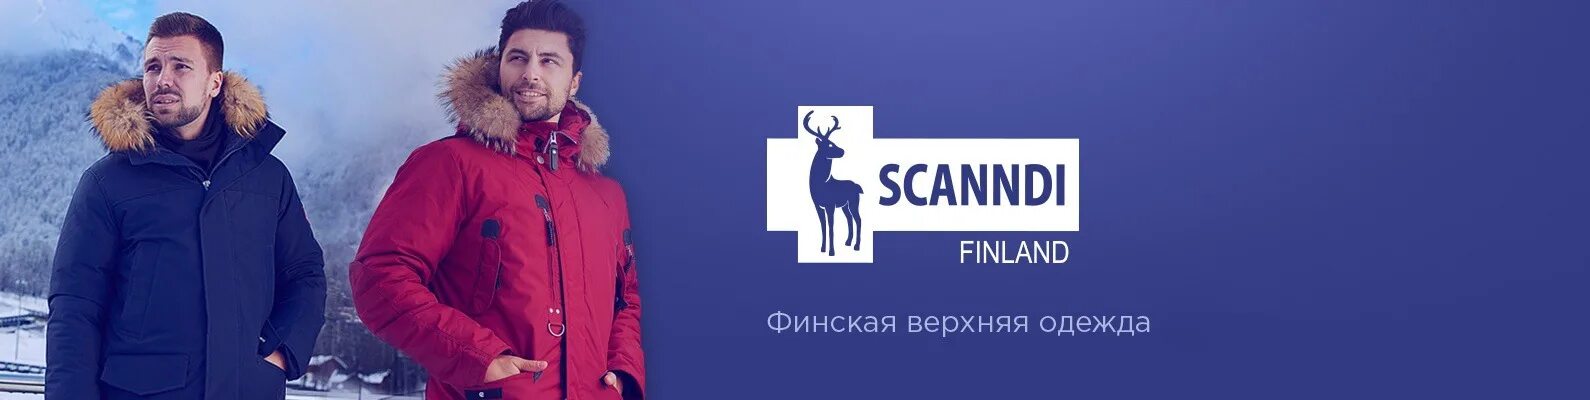 Scandi куртки мужские. Куртка Finland Scandian. Scandi Finland логотип. Scandi Finland пуховик мужской. Финская одежда Сканди.